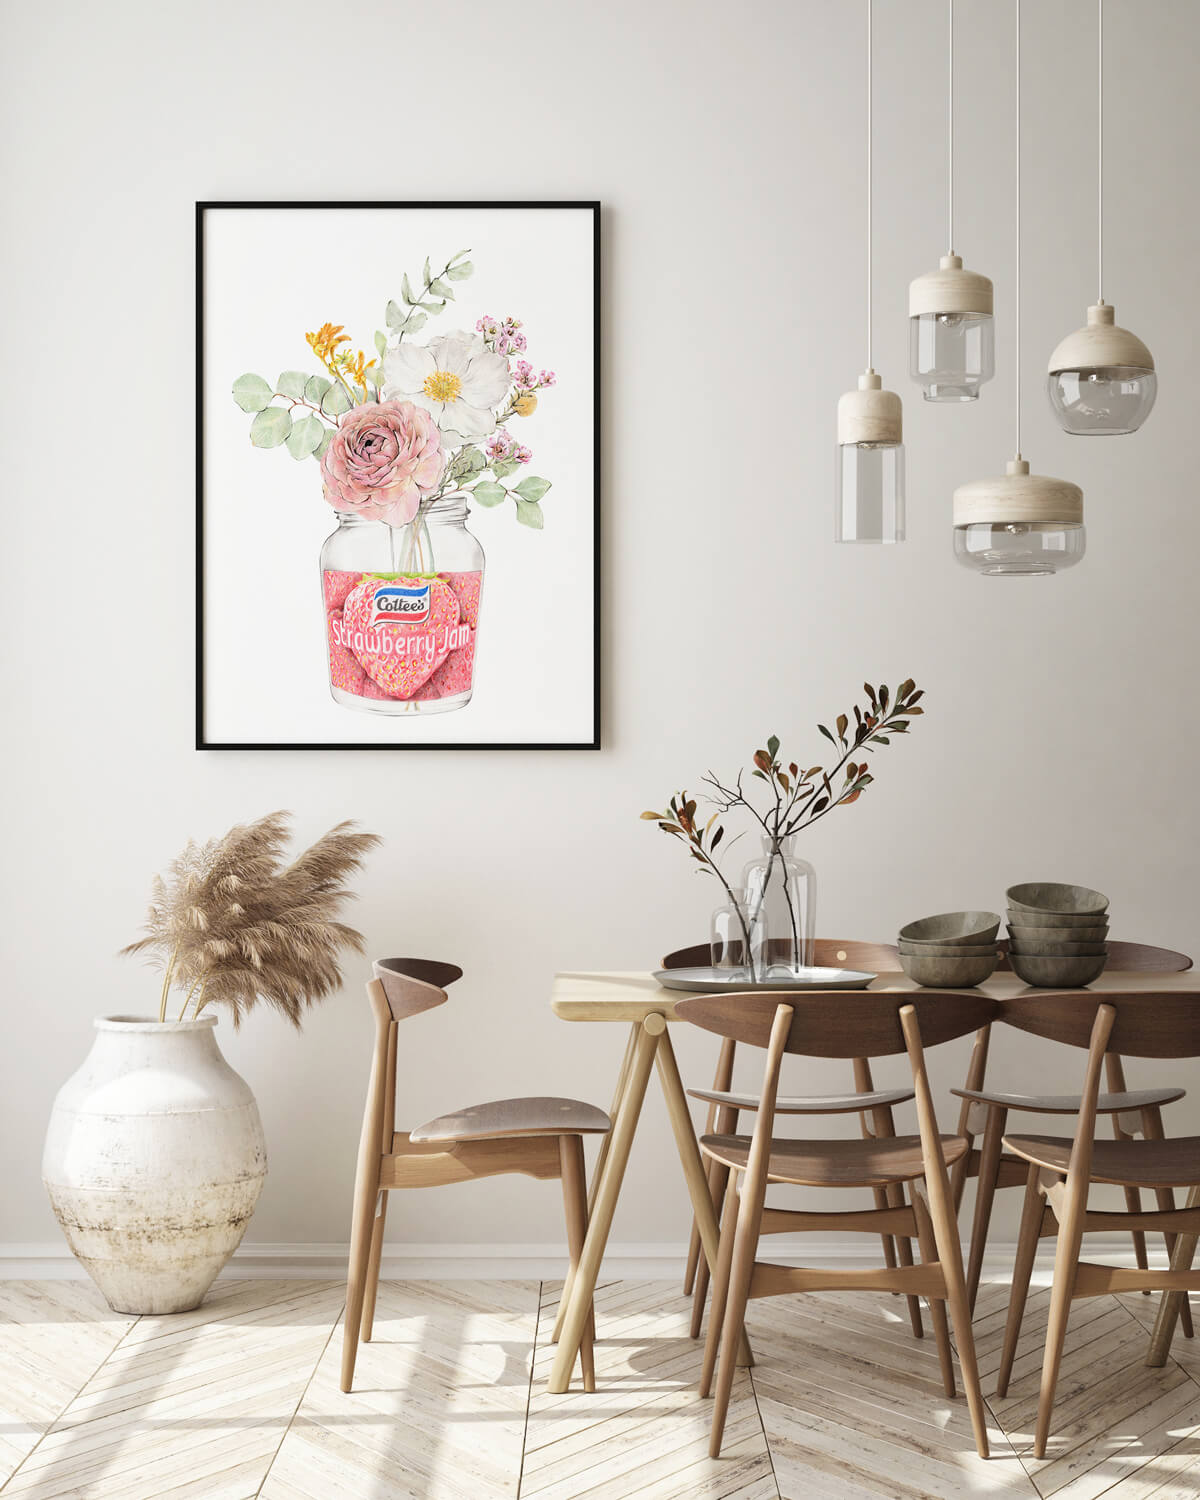 Cottee's Jam and Australian Flower Wall Art 